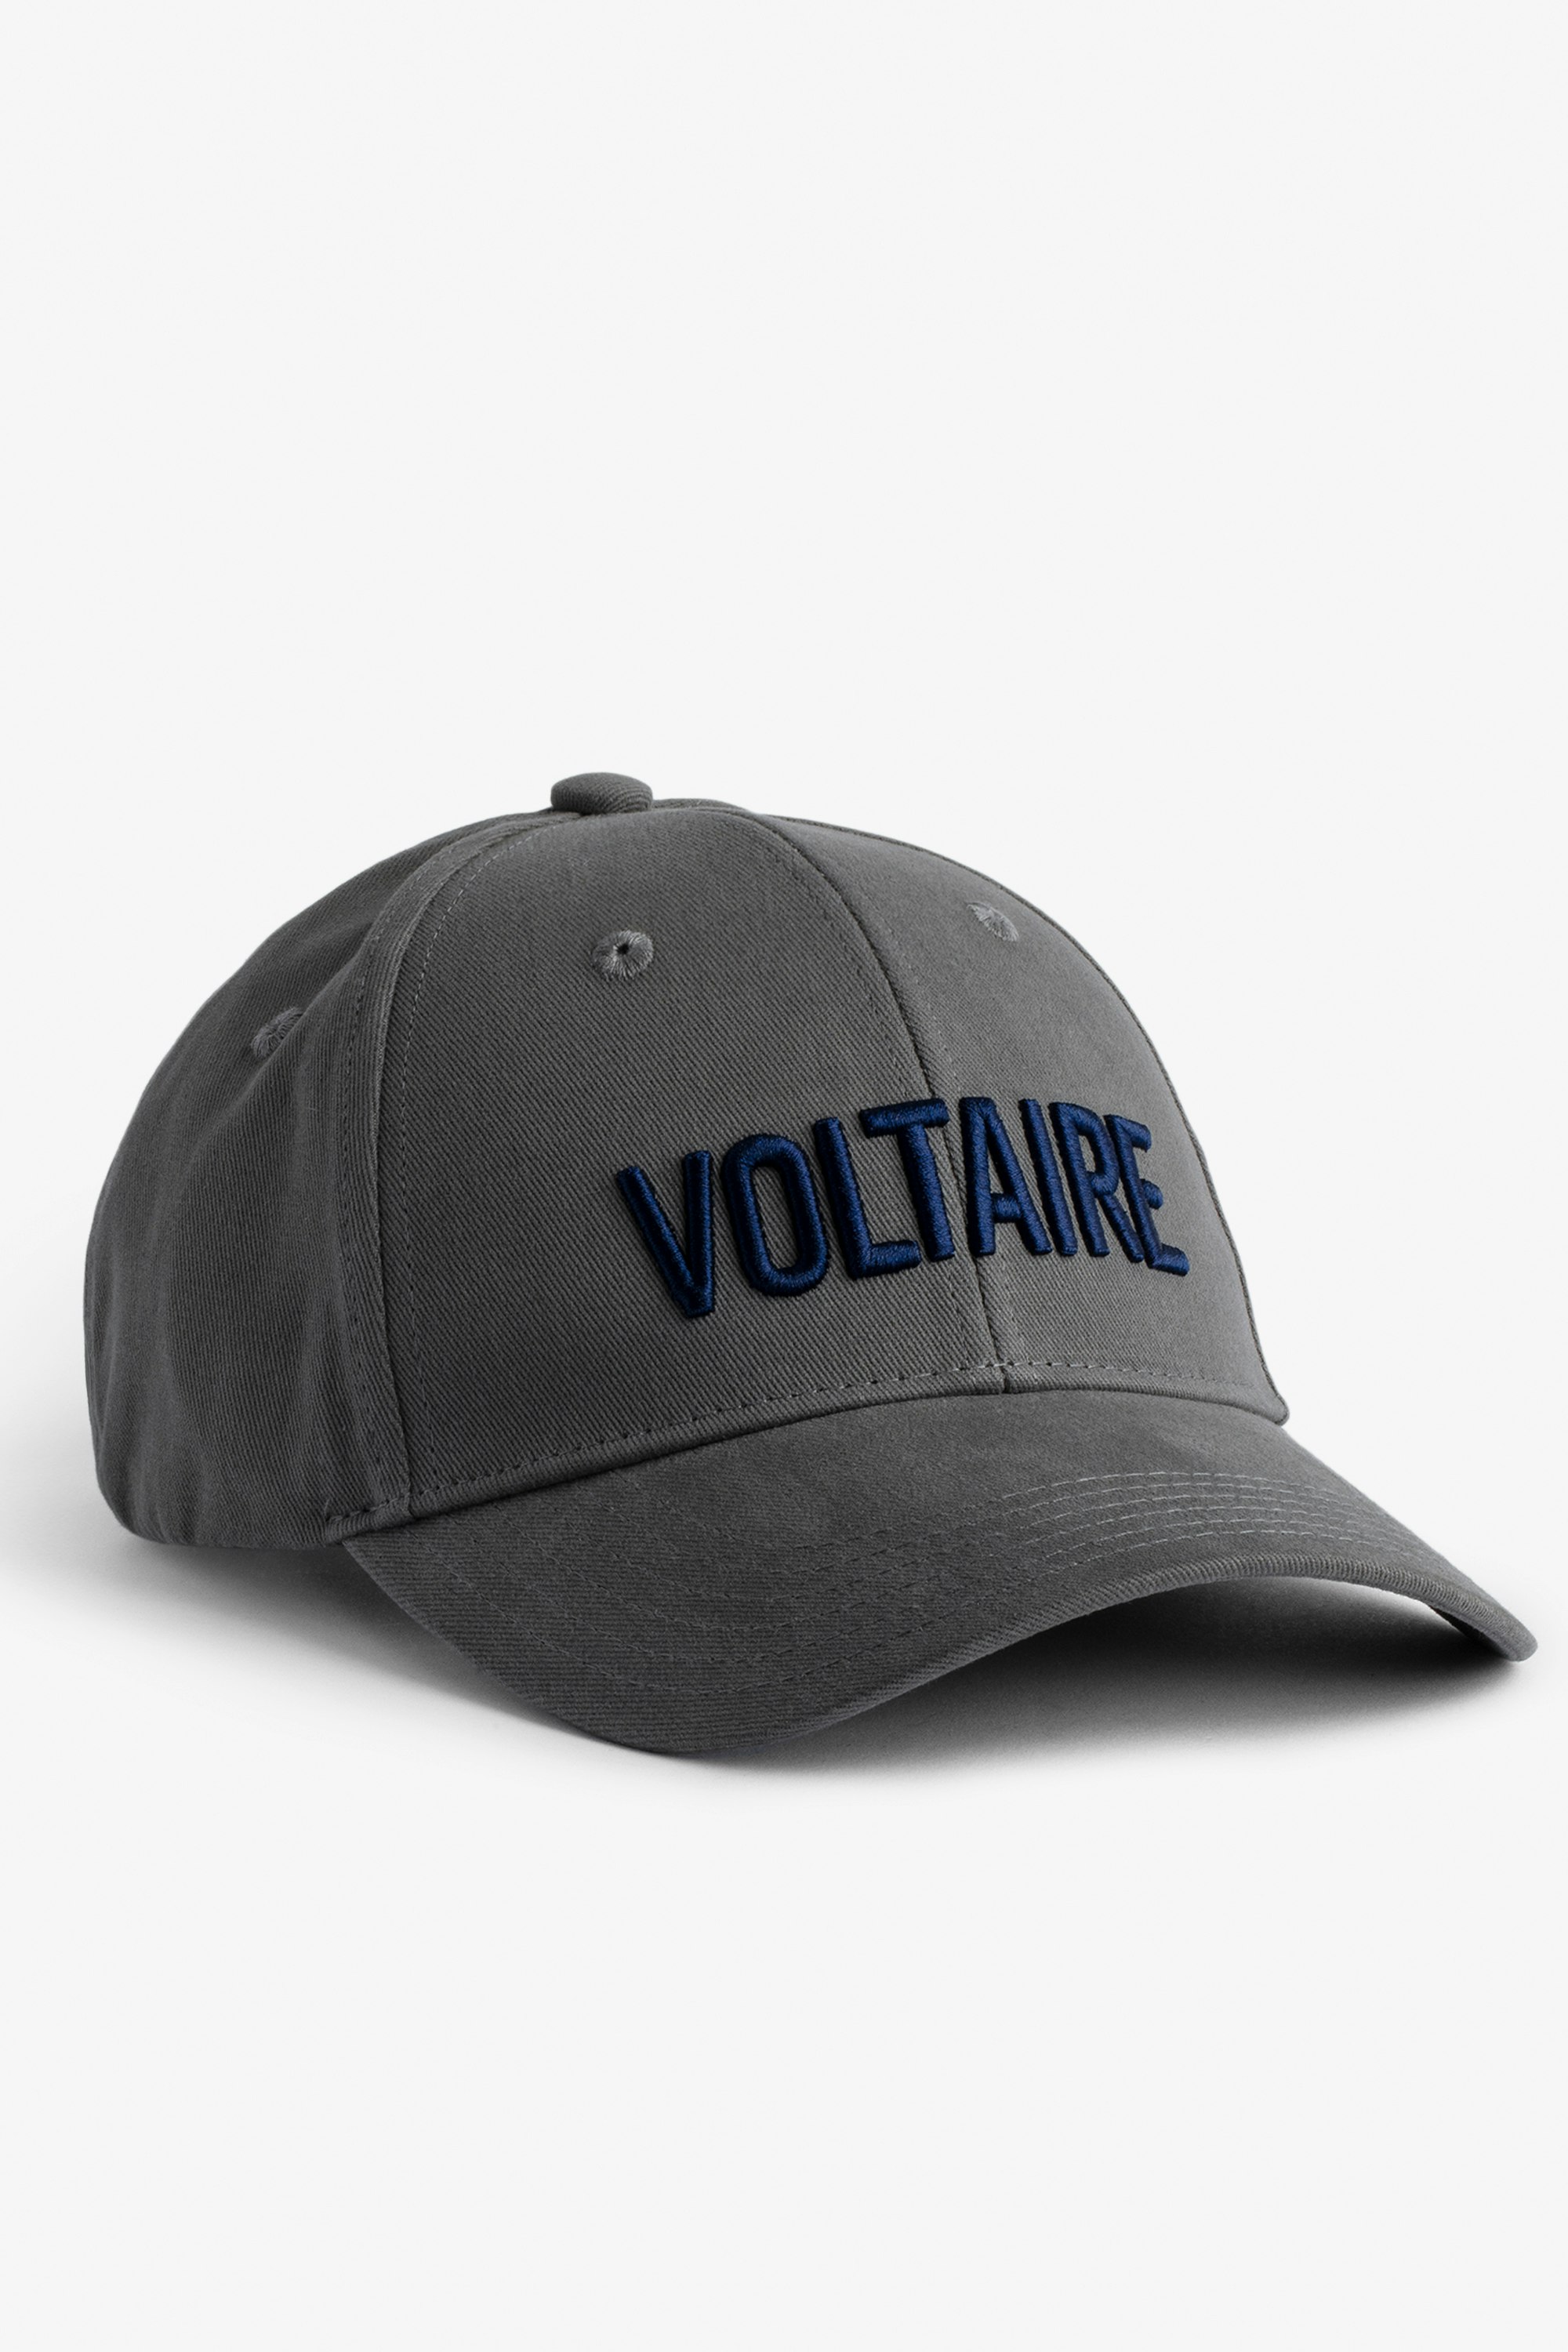 Gorra Klelia Voltaire - Gorra gris de algodón para hombre con bordado «Voltaire».